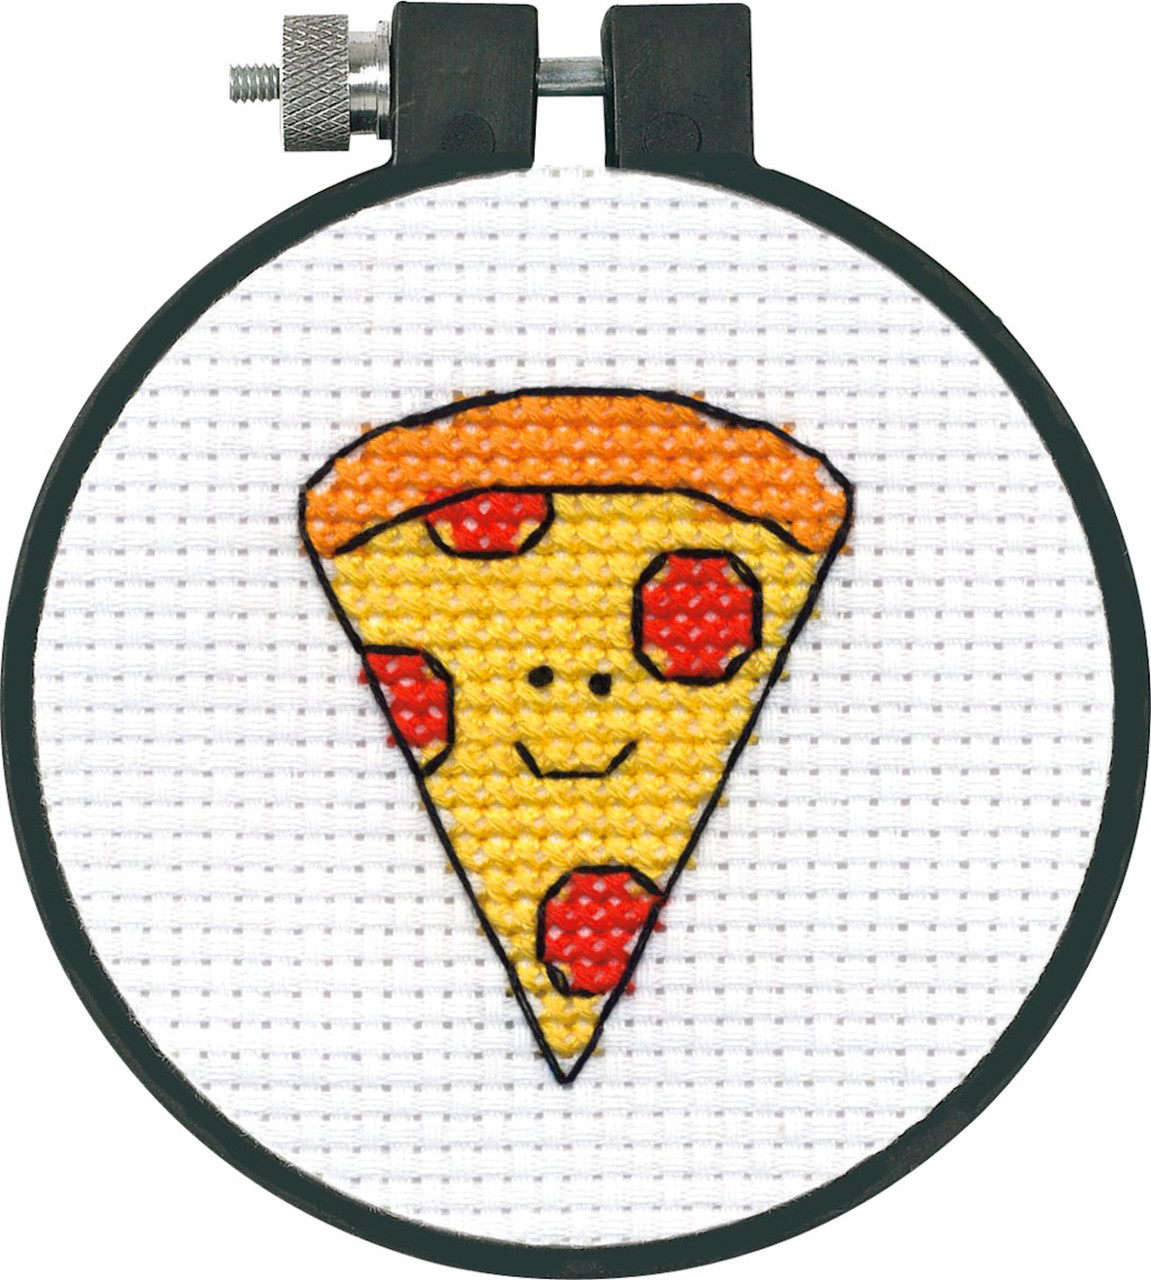 DIY Kit, Pizza Cross Stitch Kit for Beginners